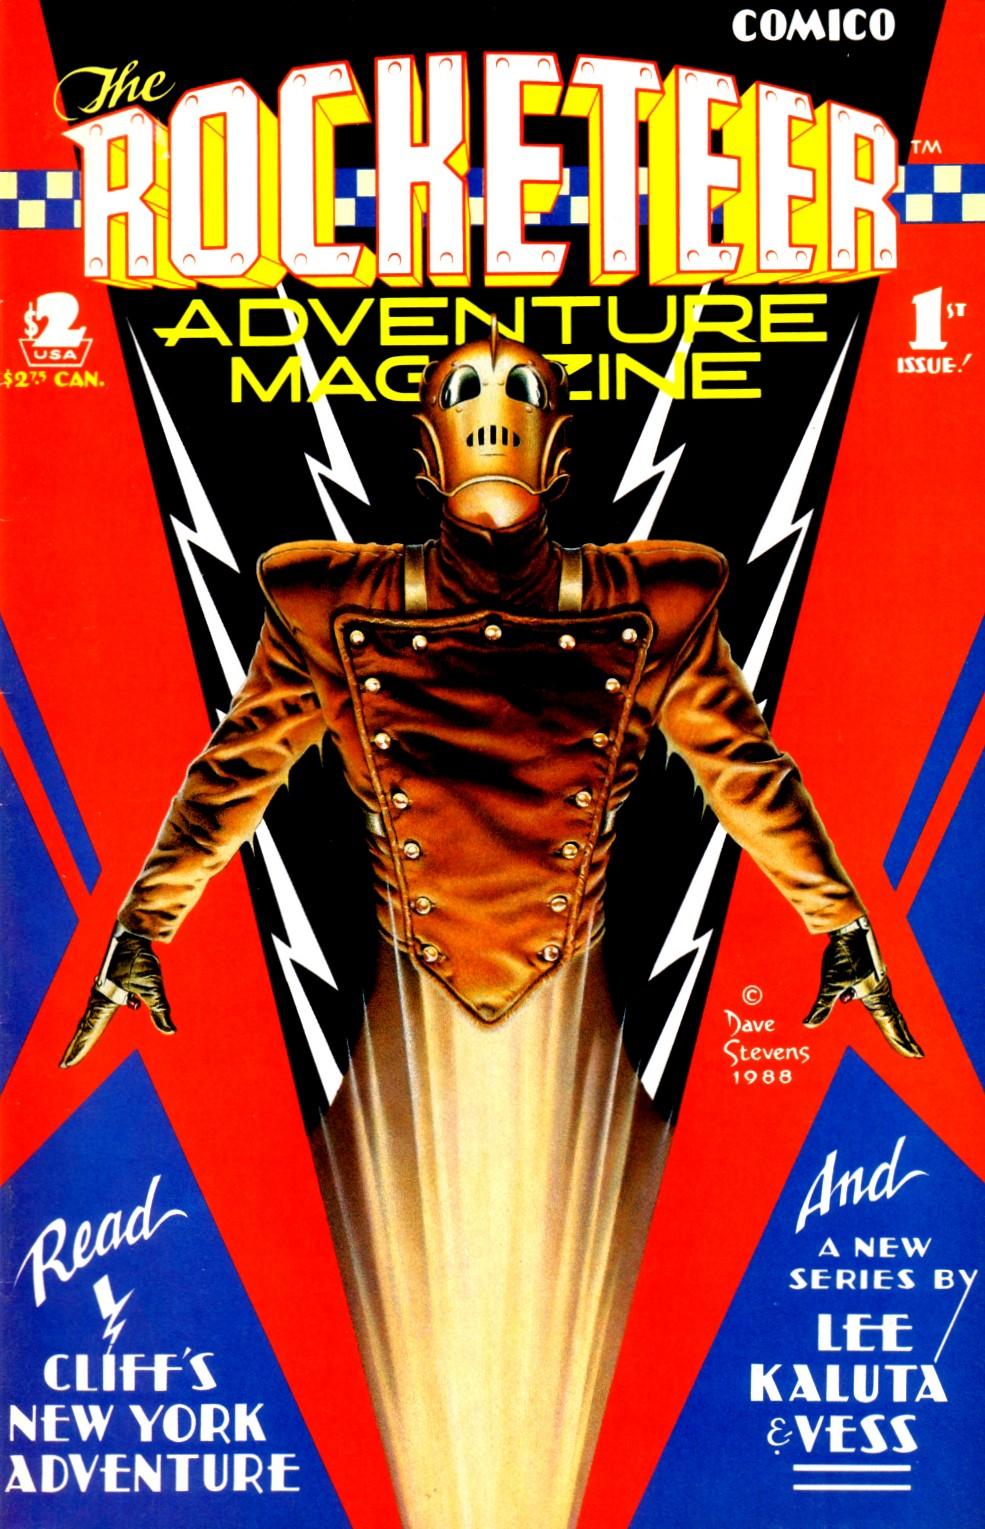 Adventures magazine. Rocketeer. Супергерой обложка. Dave Stevens. Dave Stevens художник.